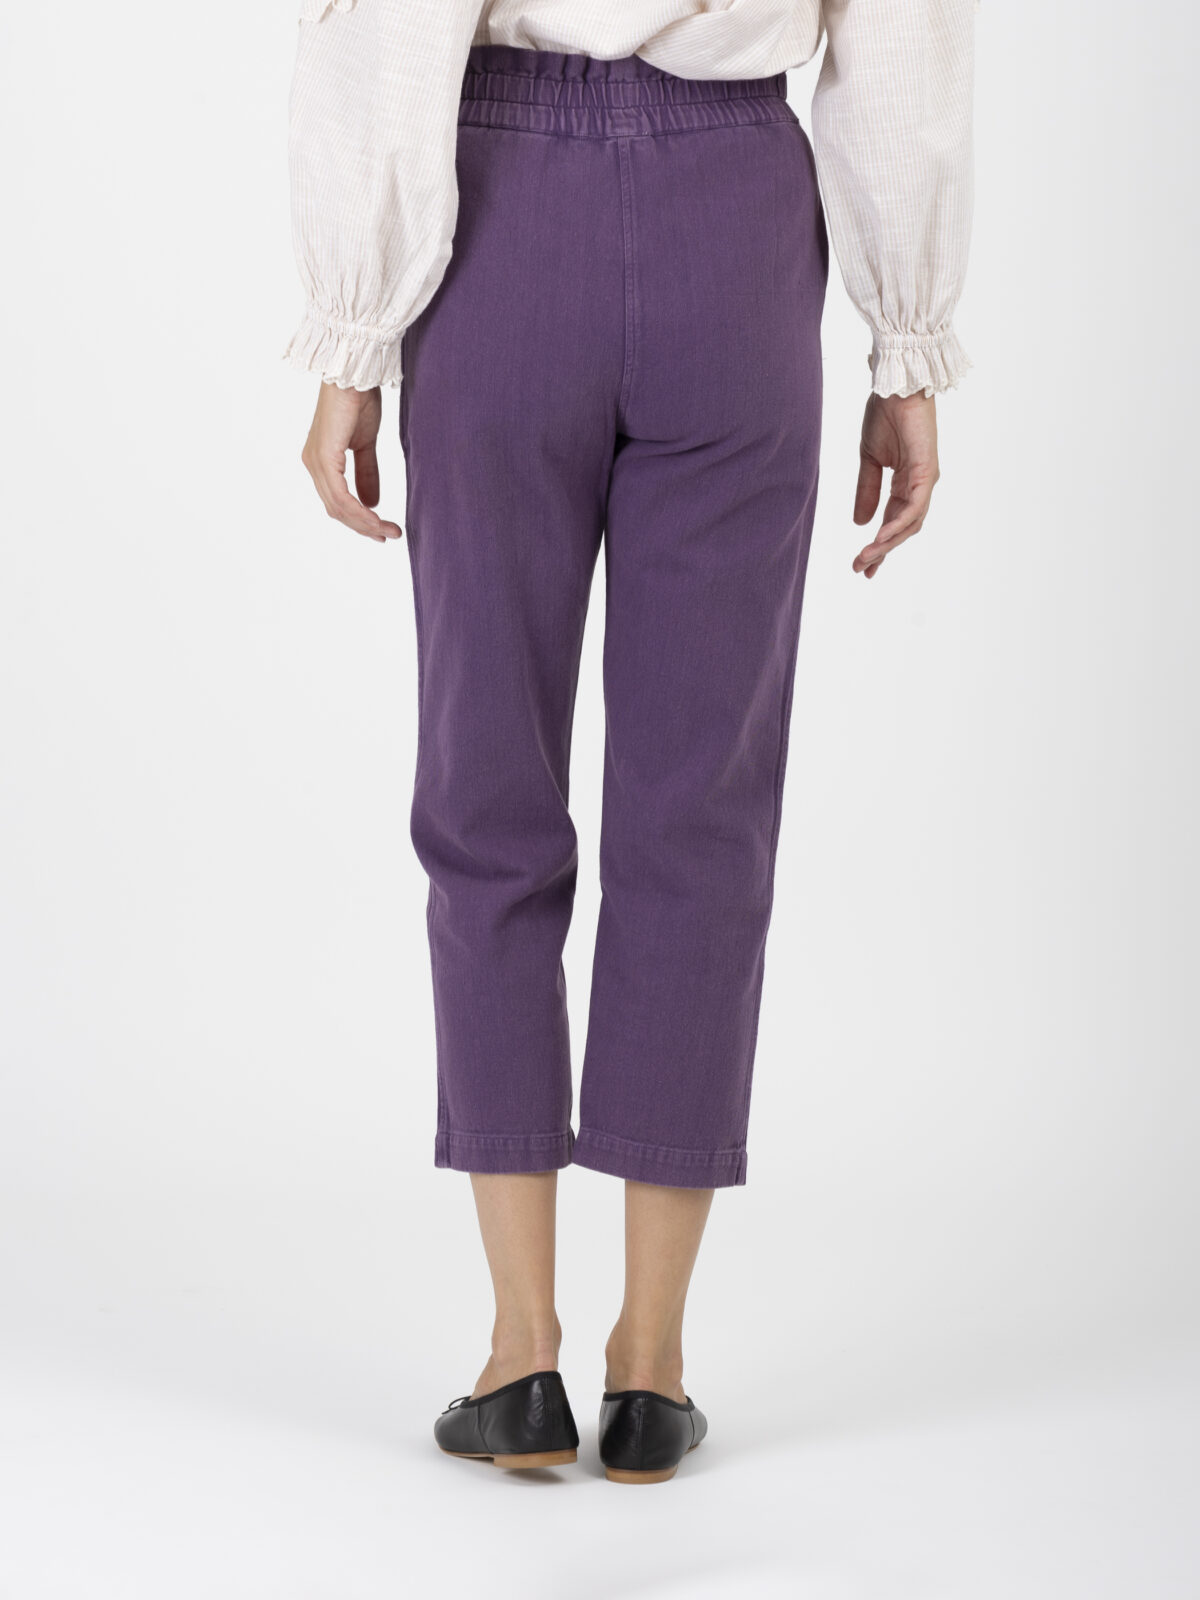 arlove-purple-pants-high-waisted-elastic-waist-patch-pockets-louise-misha-matchboxathens